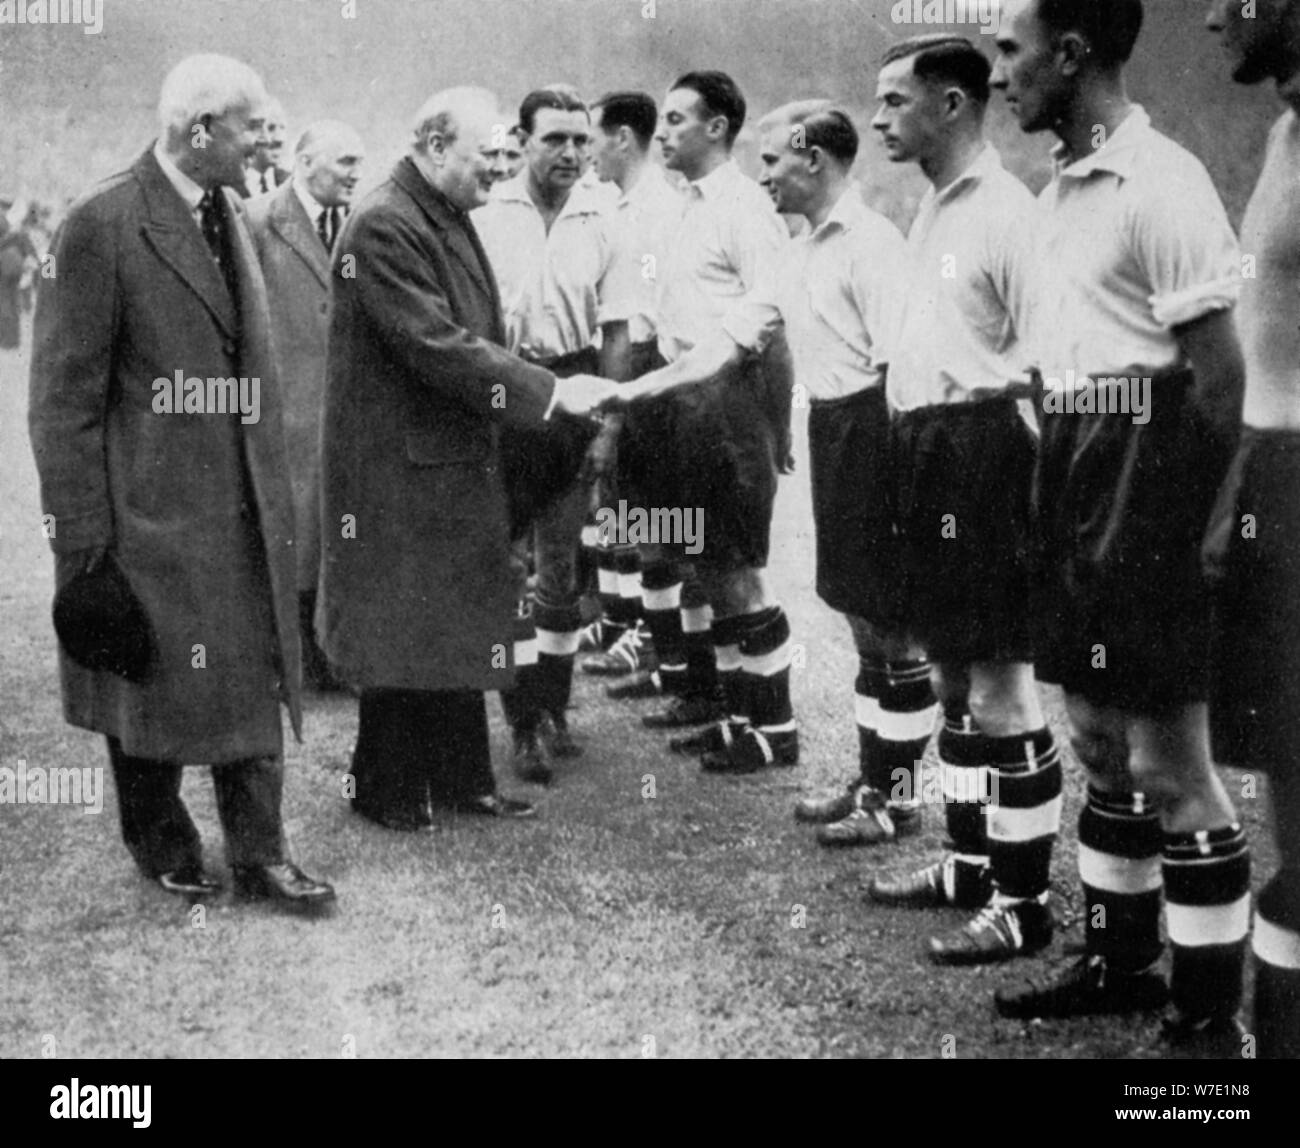 Winston Churchill greets the England football team, Wembley, London, October 1941.Artist: London News Agency Stock Photo